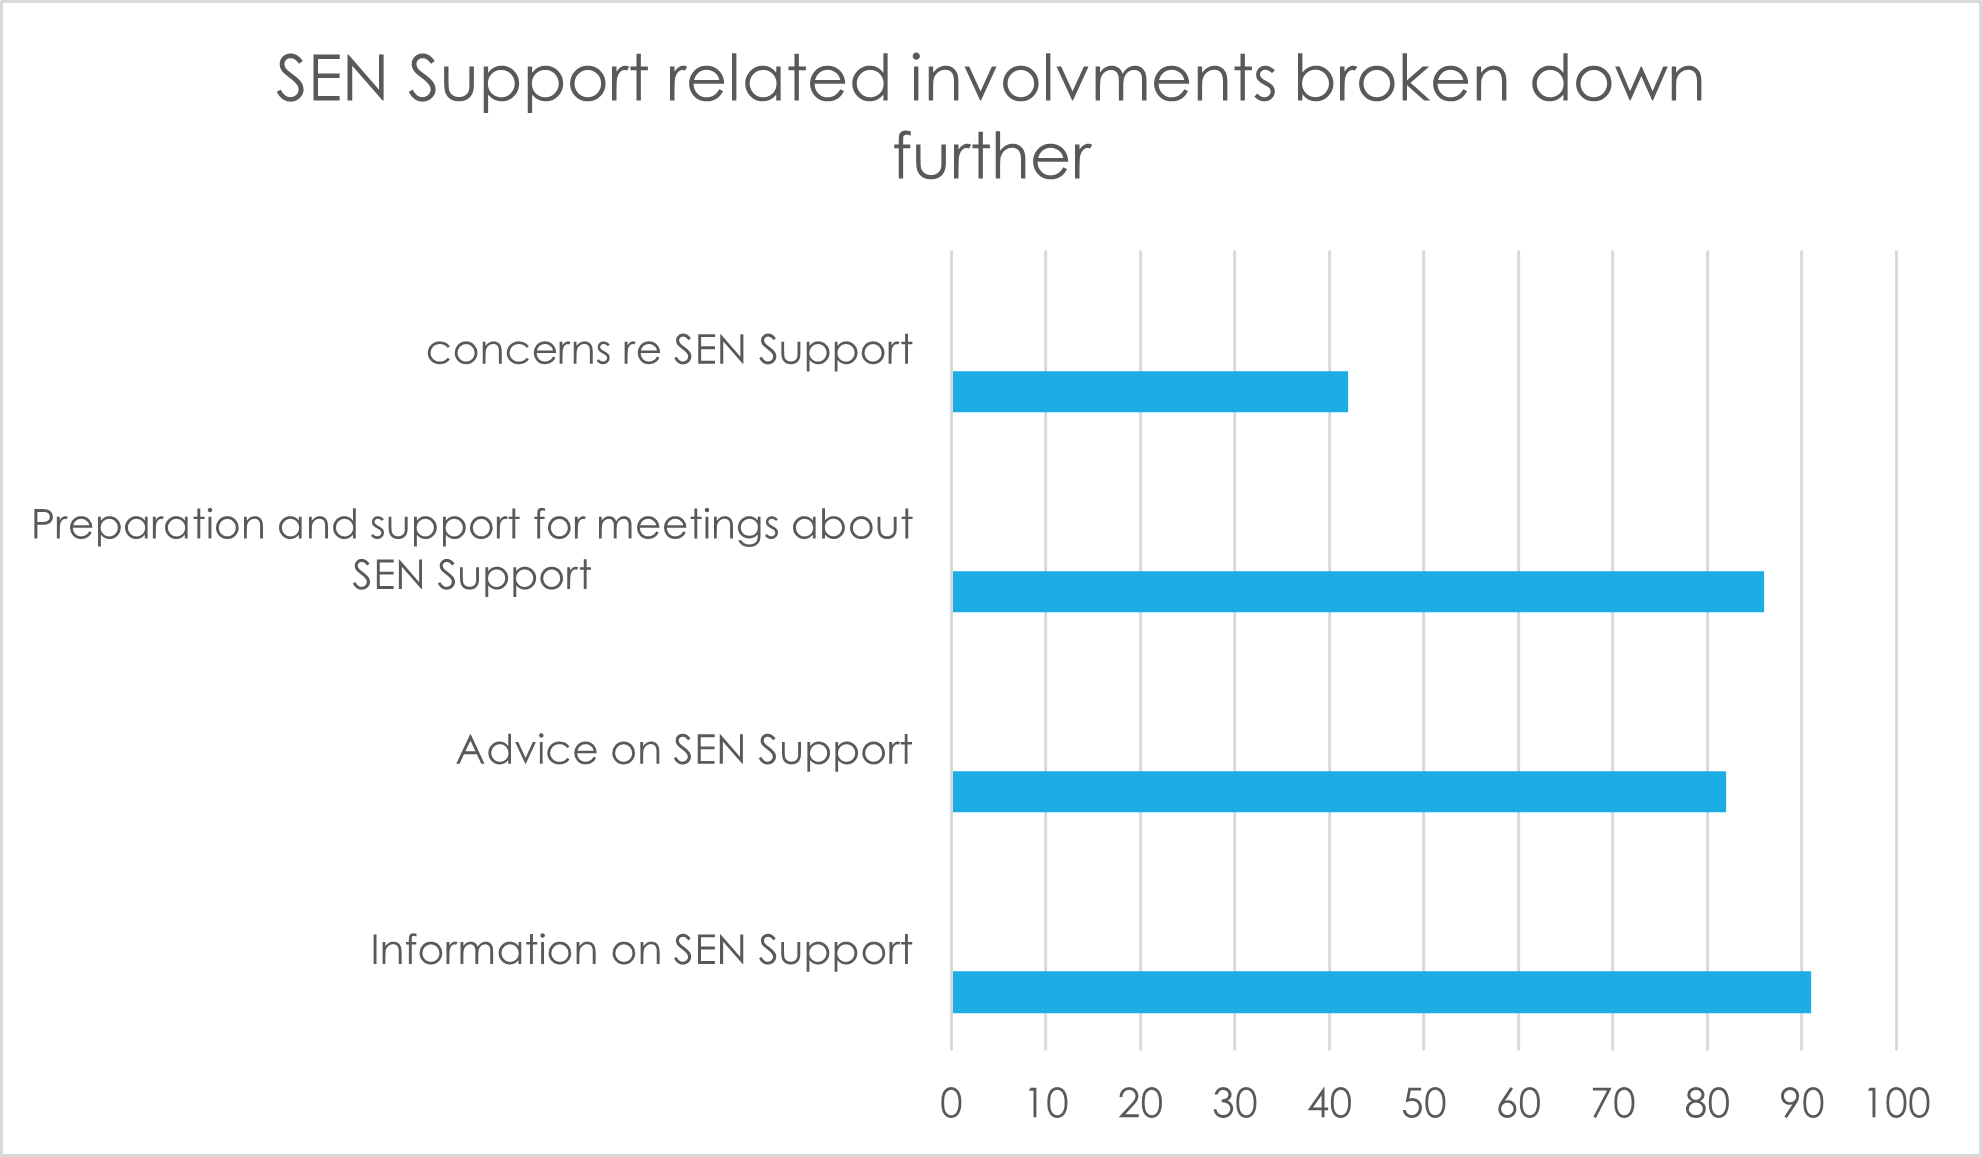 Breakdown of sen support related cases